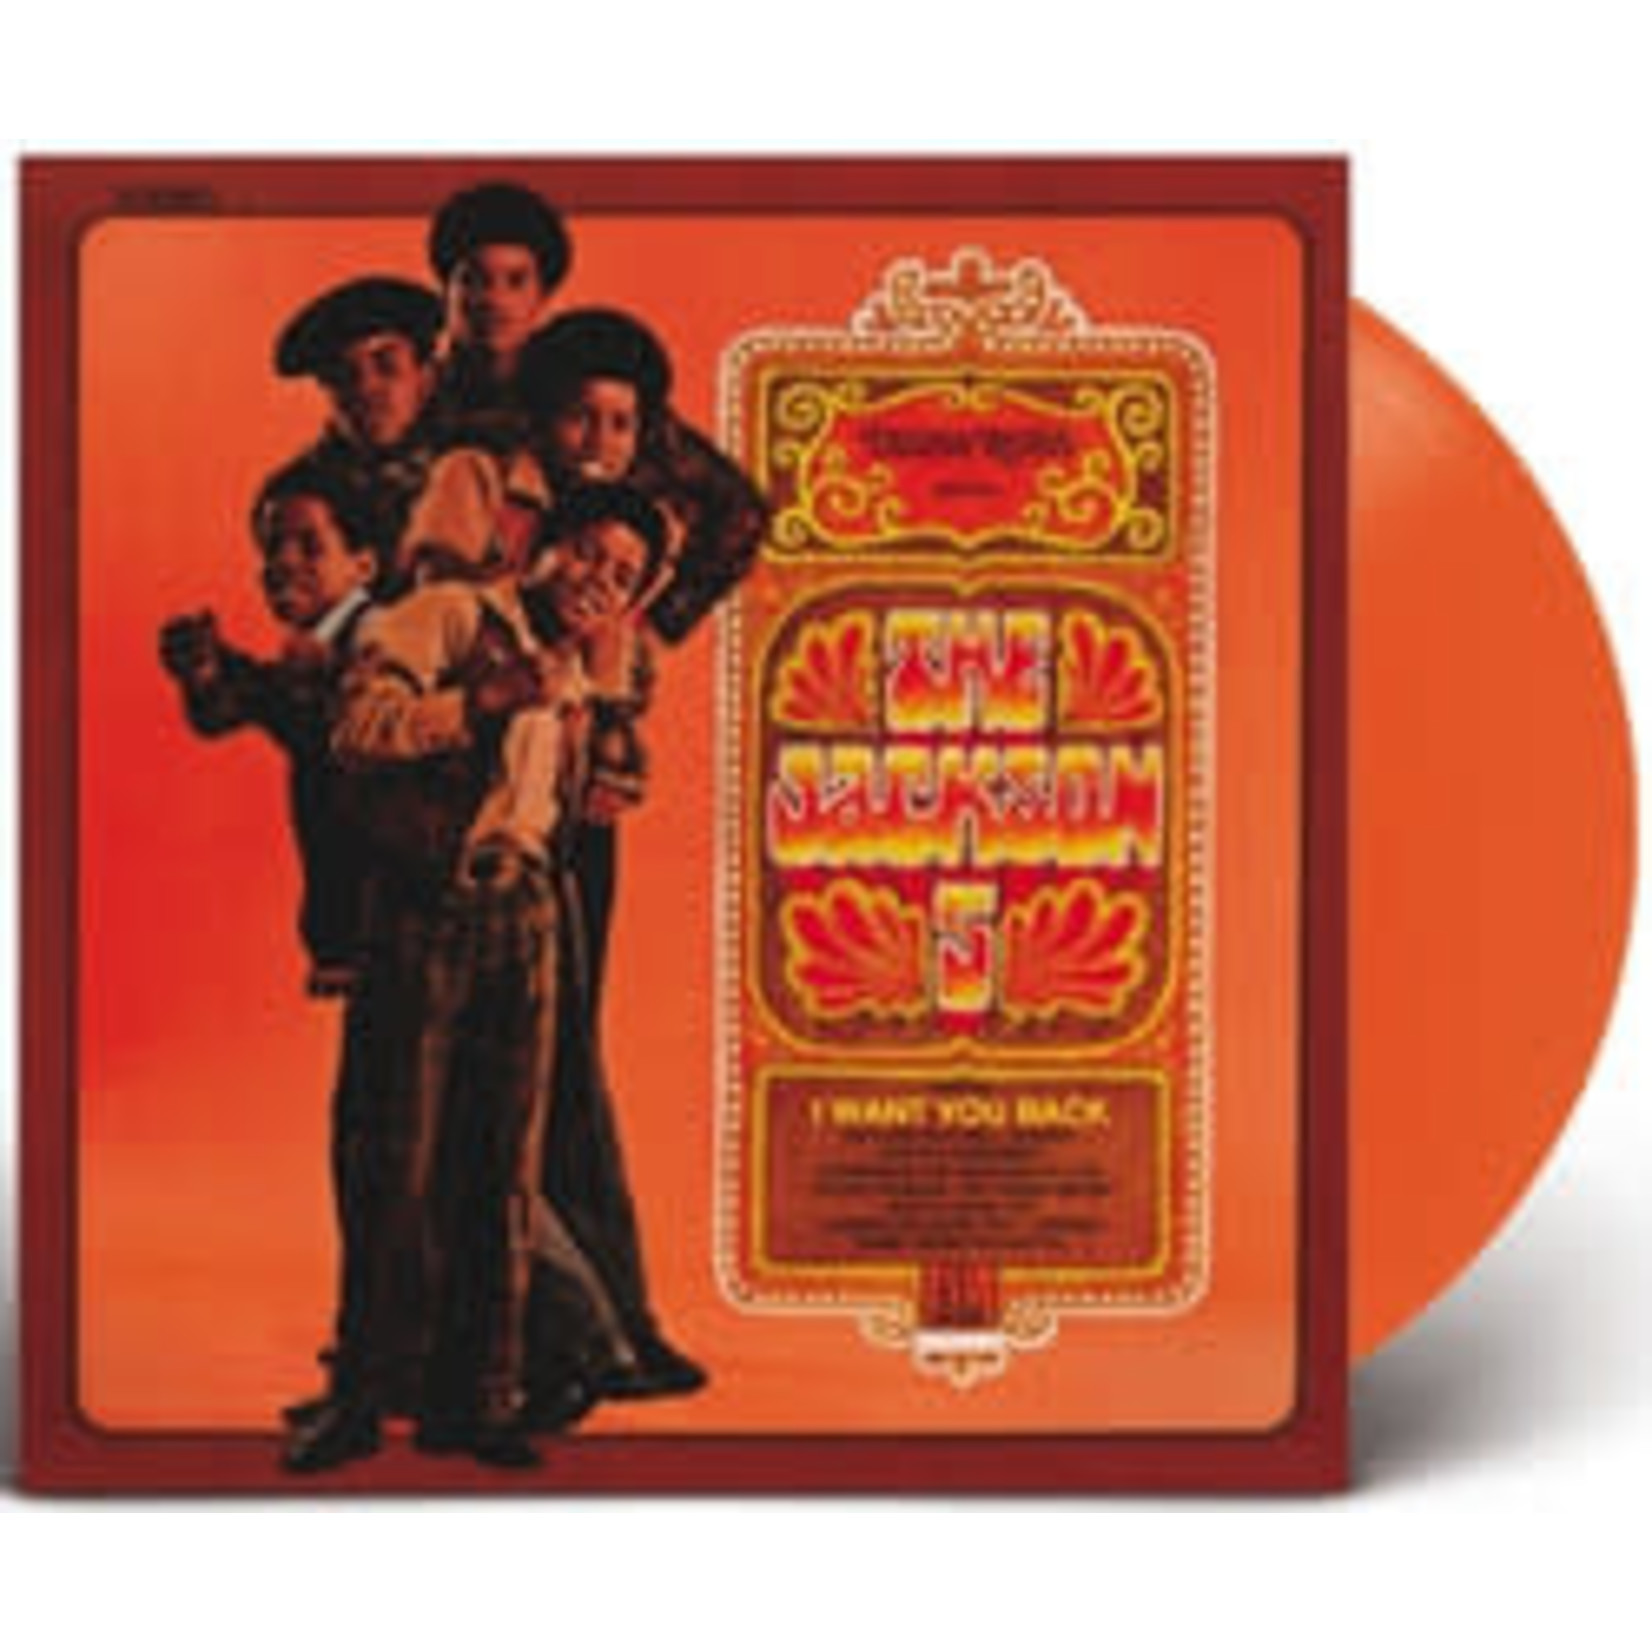 Motown Jackson 5 - Diana Ross Presents... (LP) [Orange]